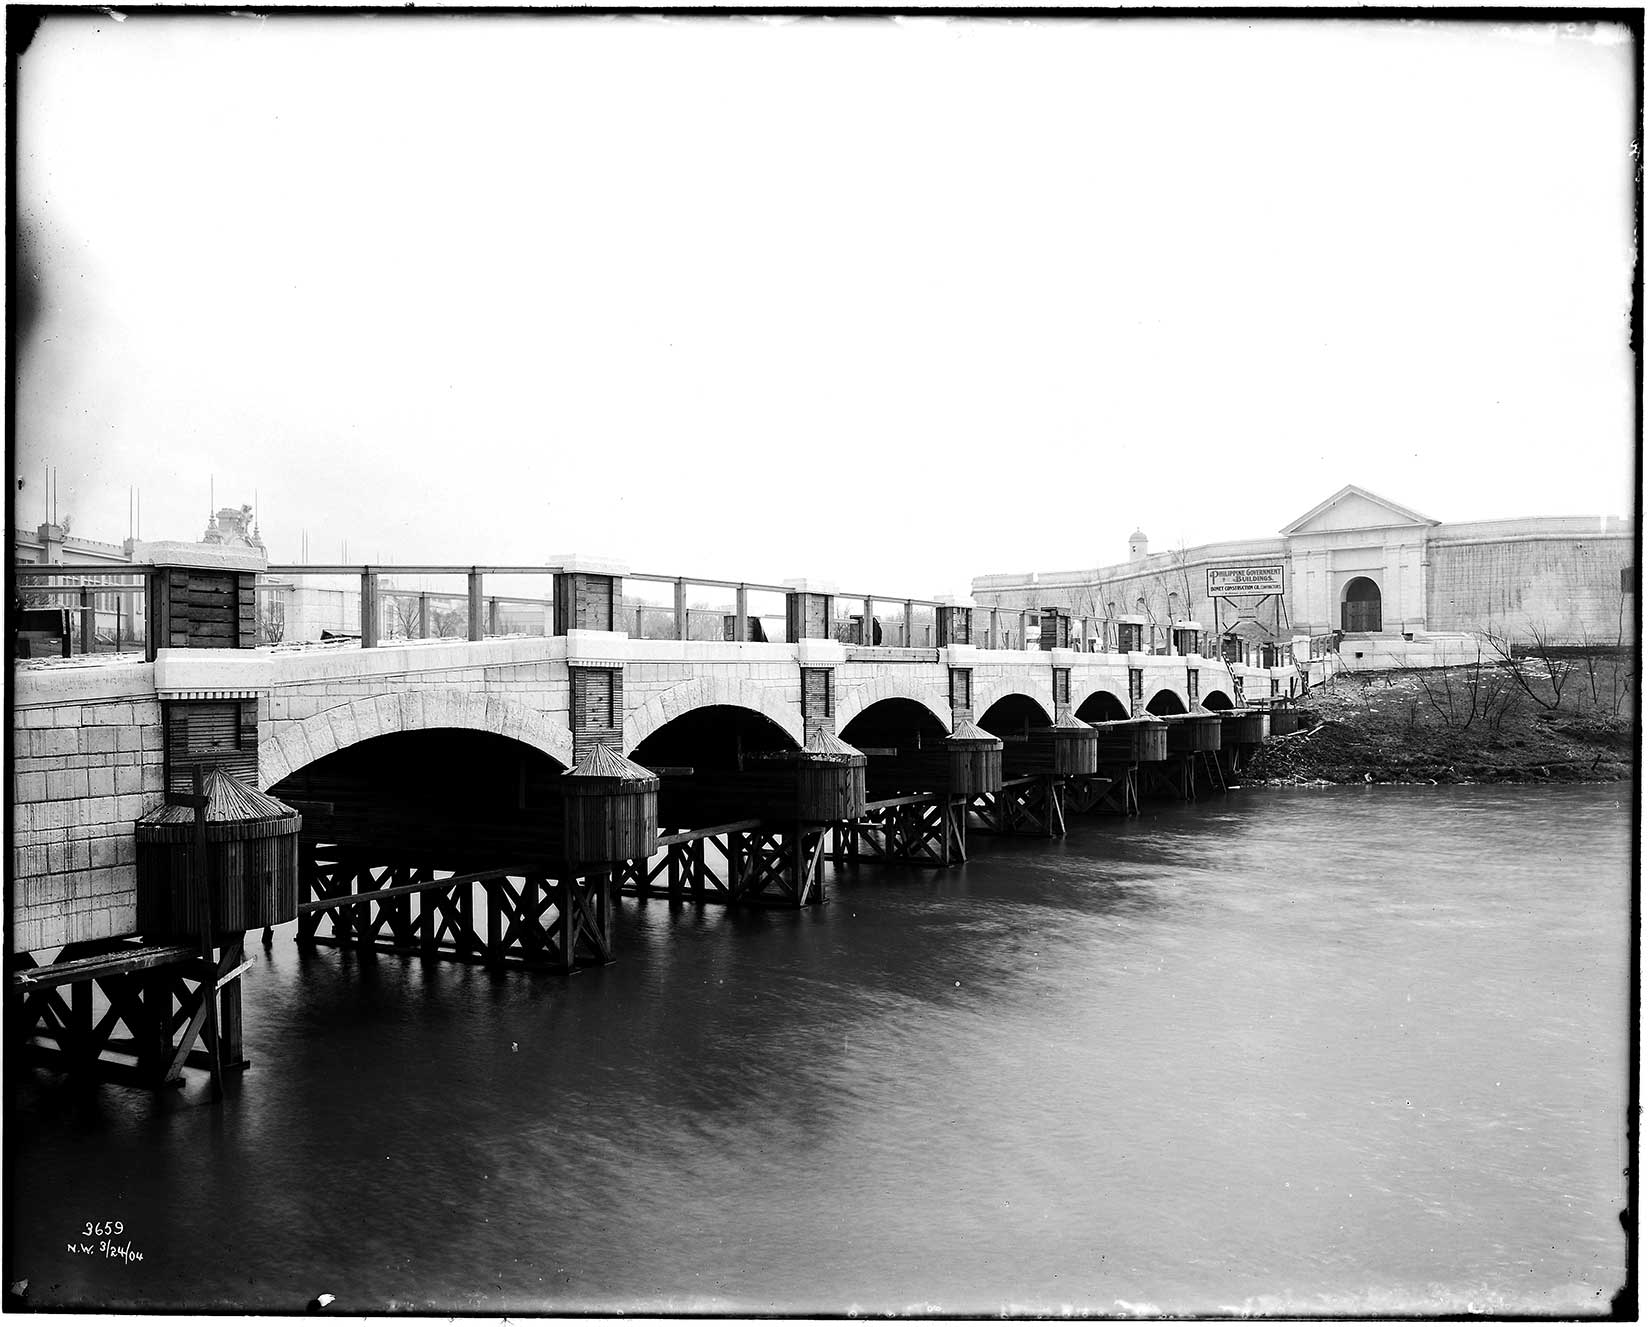 1904-worlds-fair-bridge-spain-intramuros